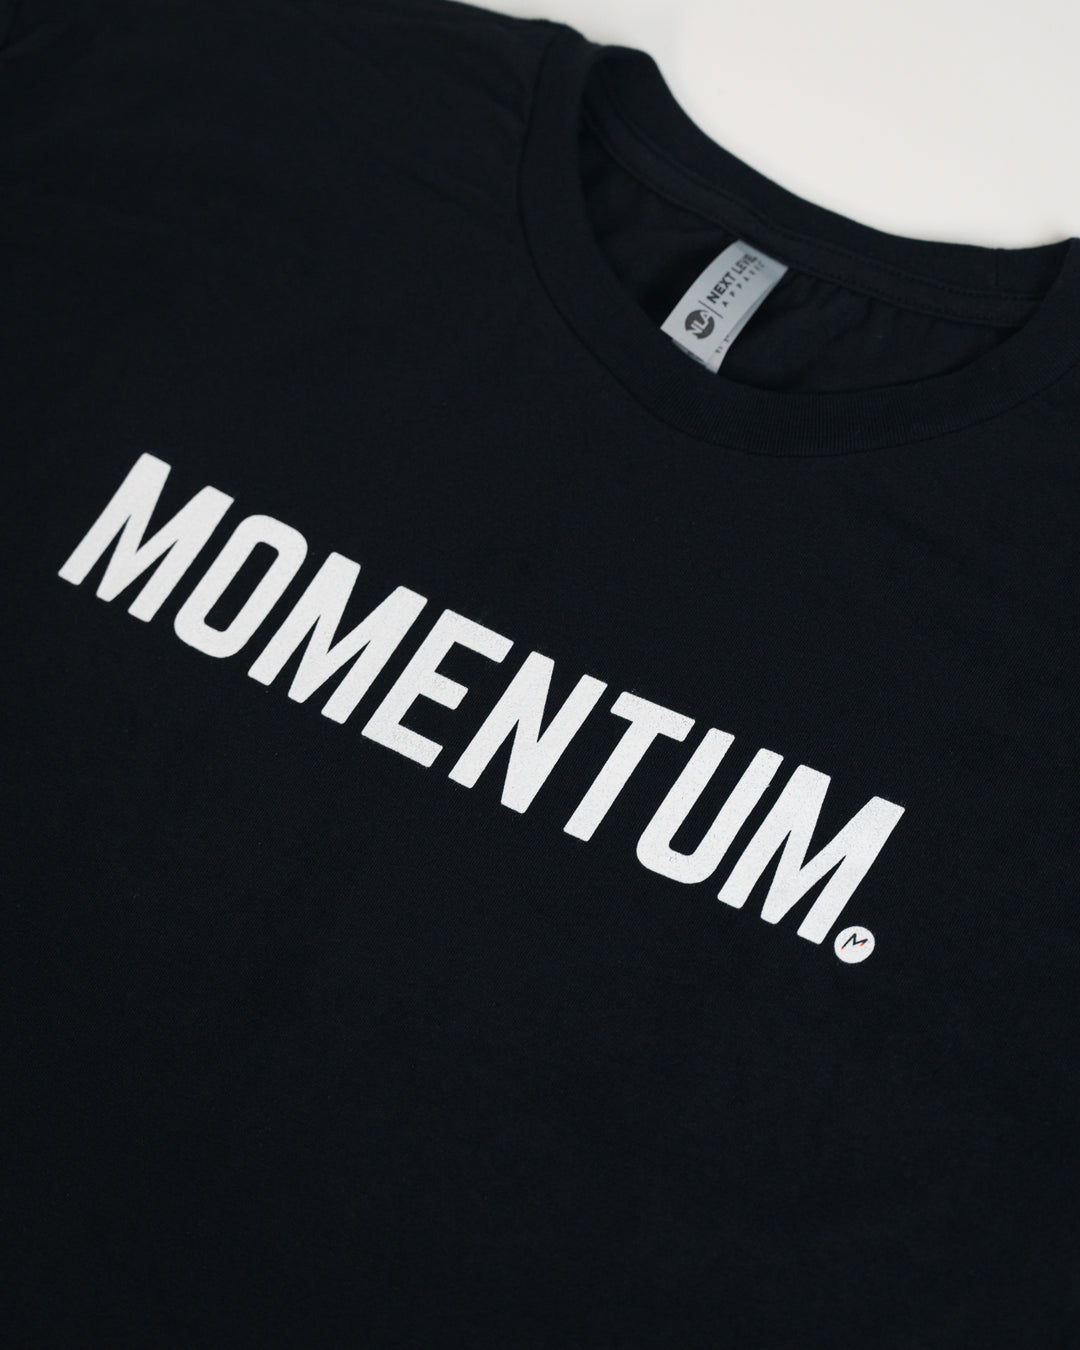 Momentum Premium Baseball Apparel Black Tee print up close